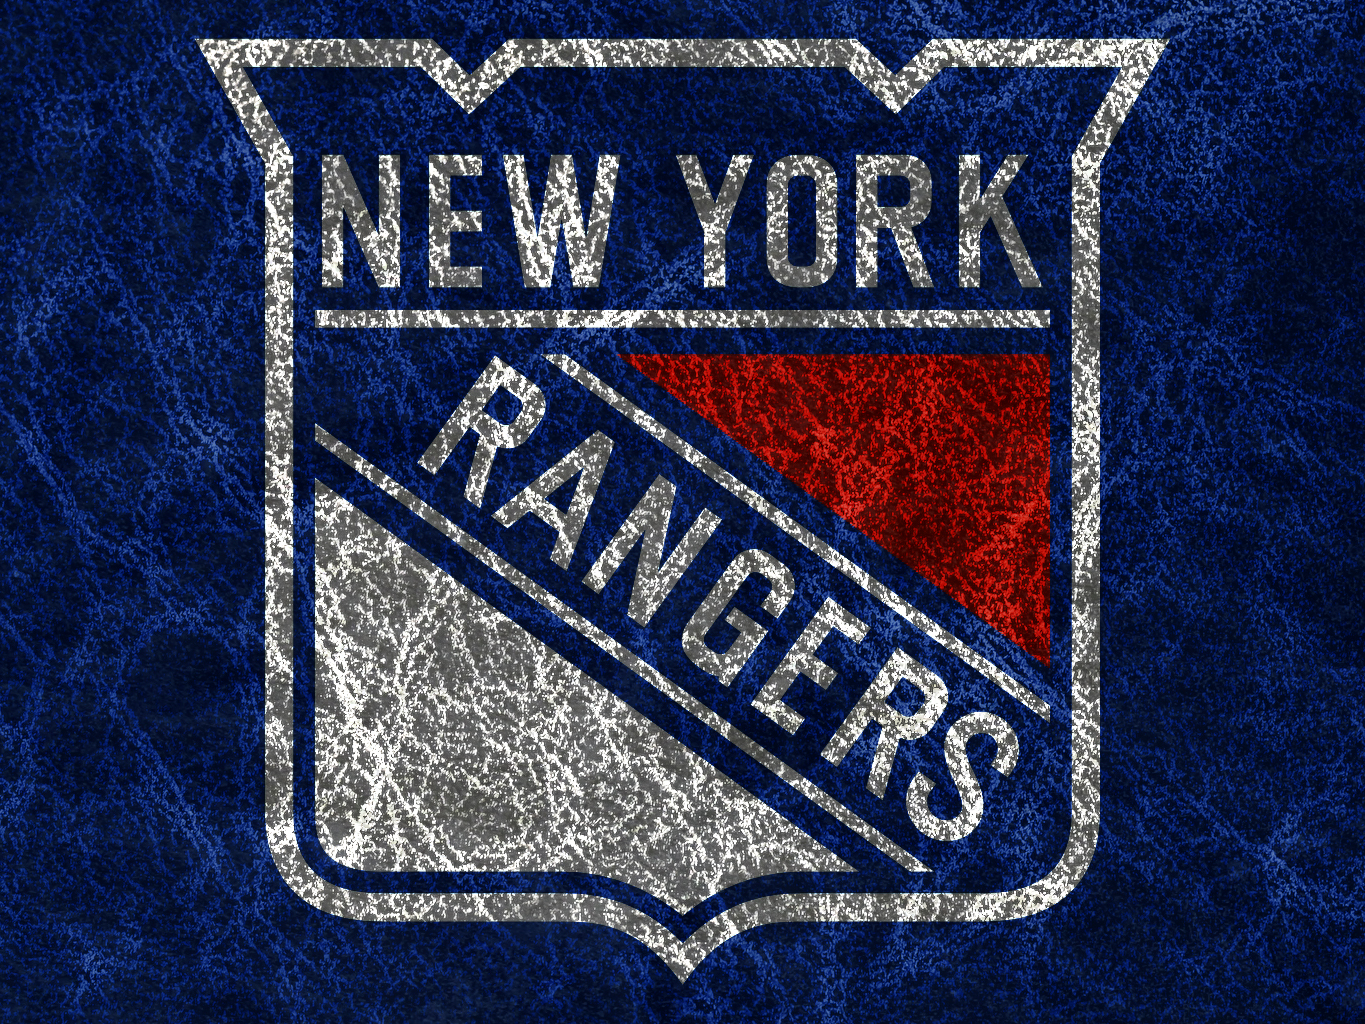 39] New York Rangers iPhone Wallpaper on